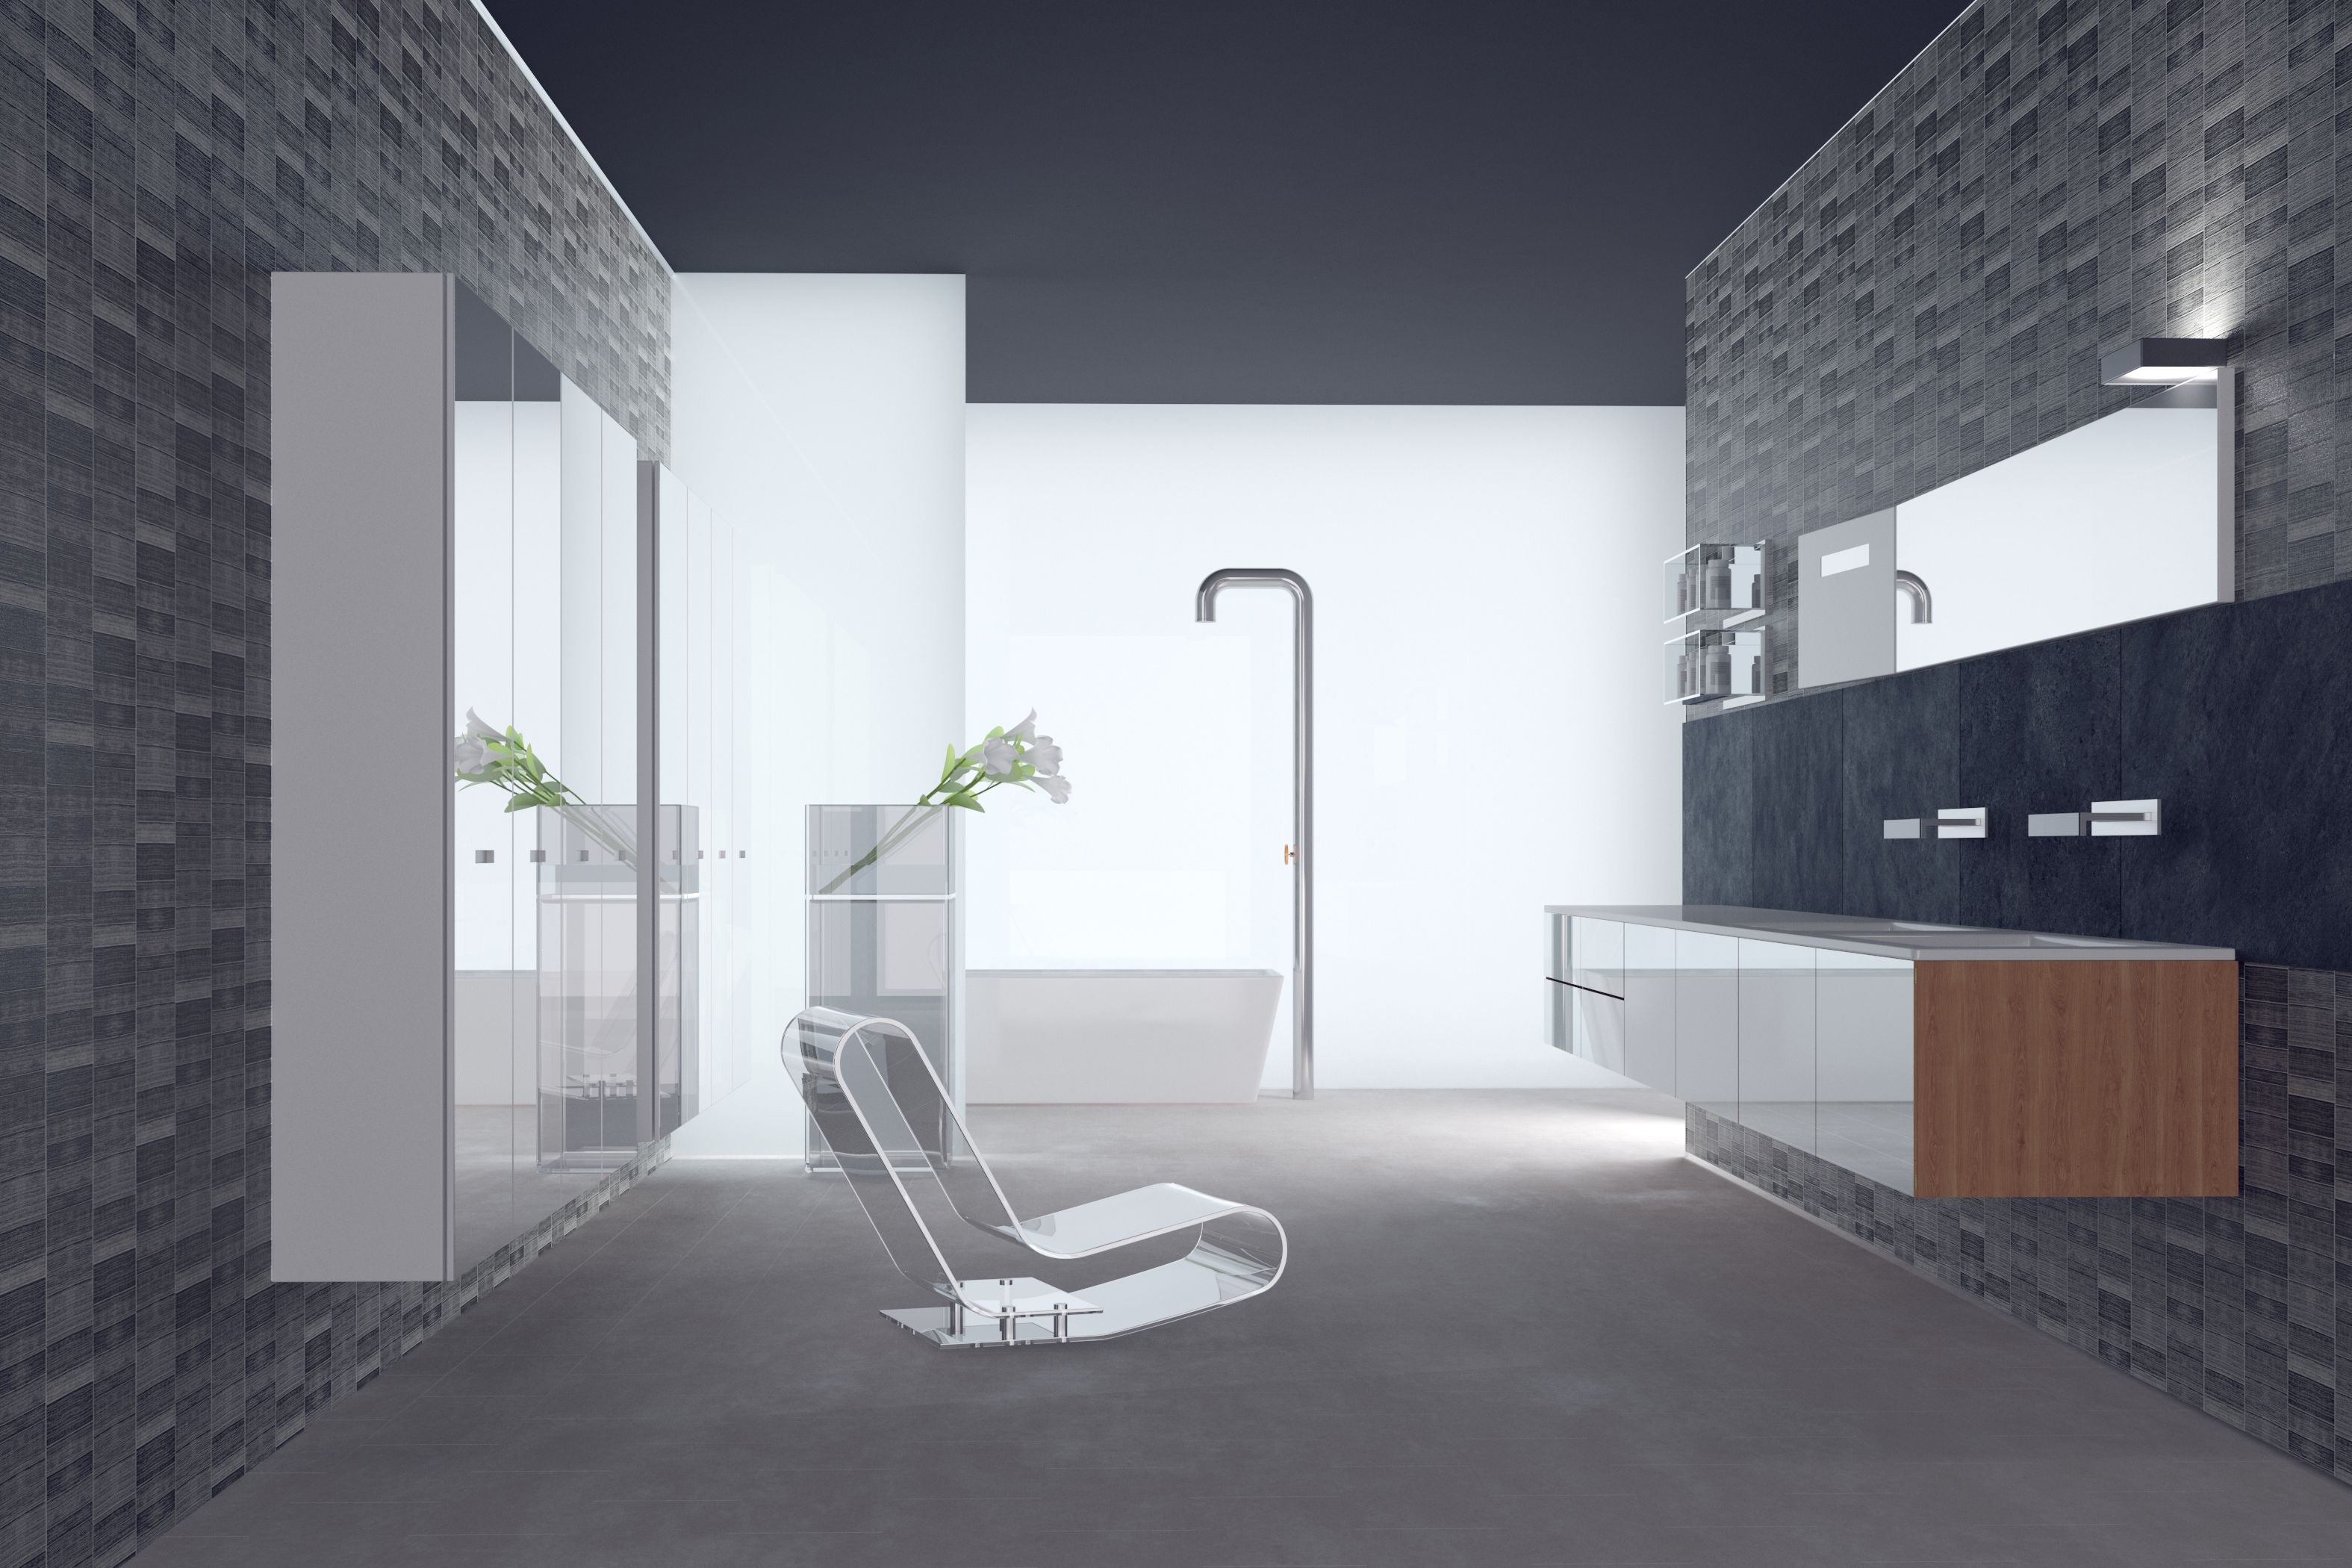 Dark Grey Small Tile 10mm Bathroom Cladding Shower Wall Panels